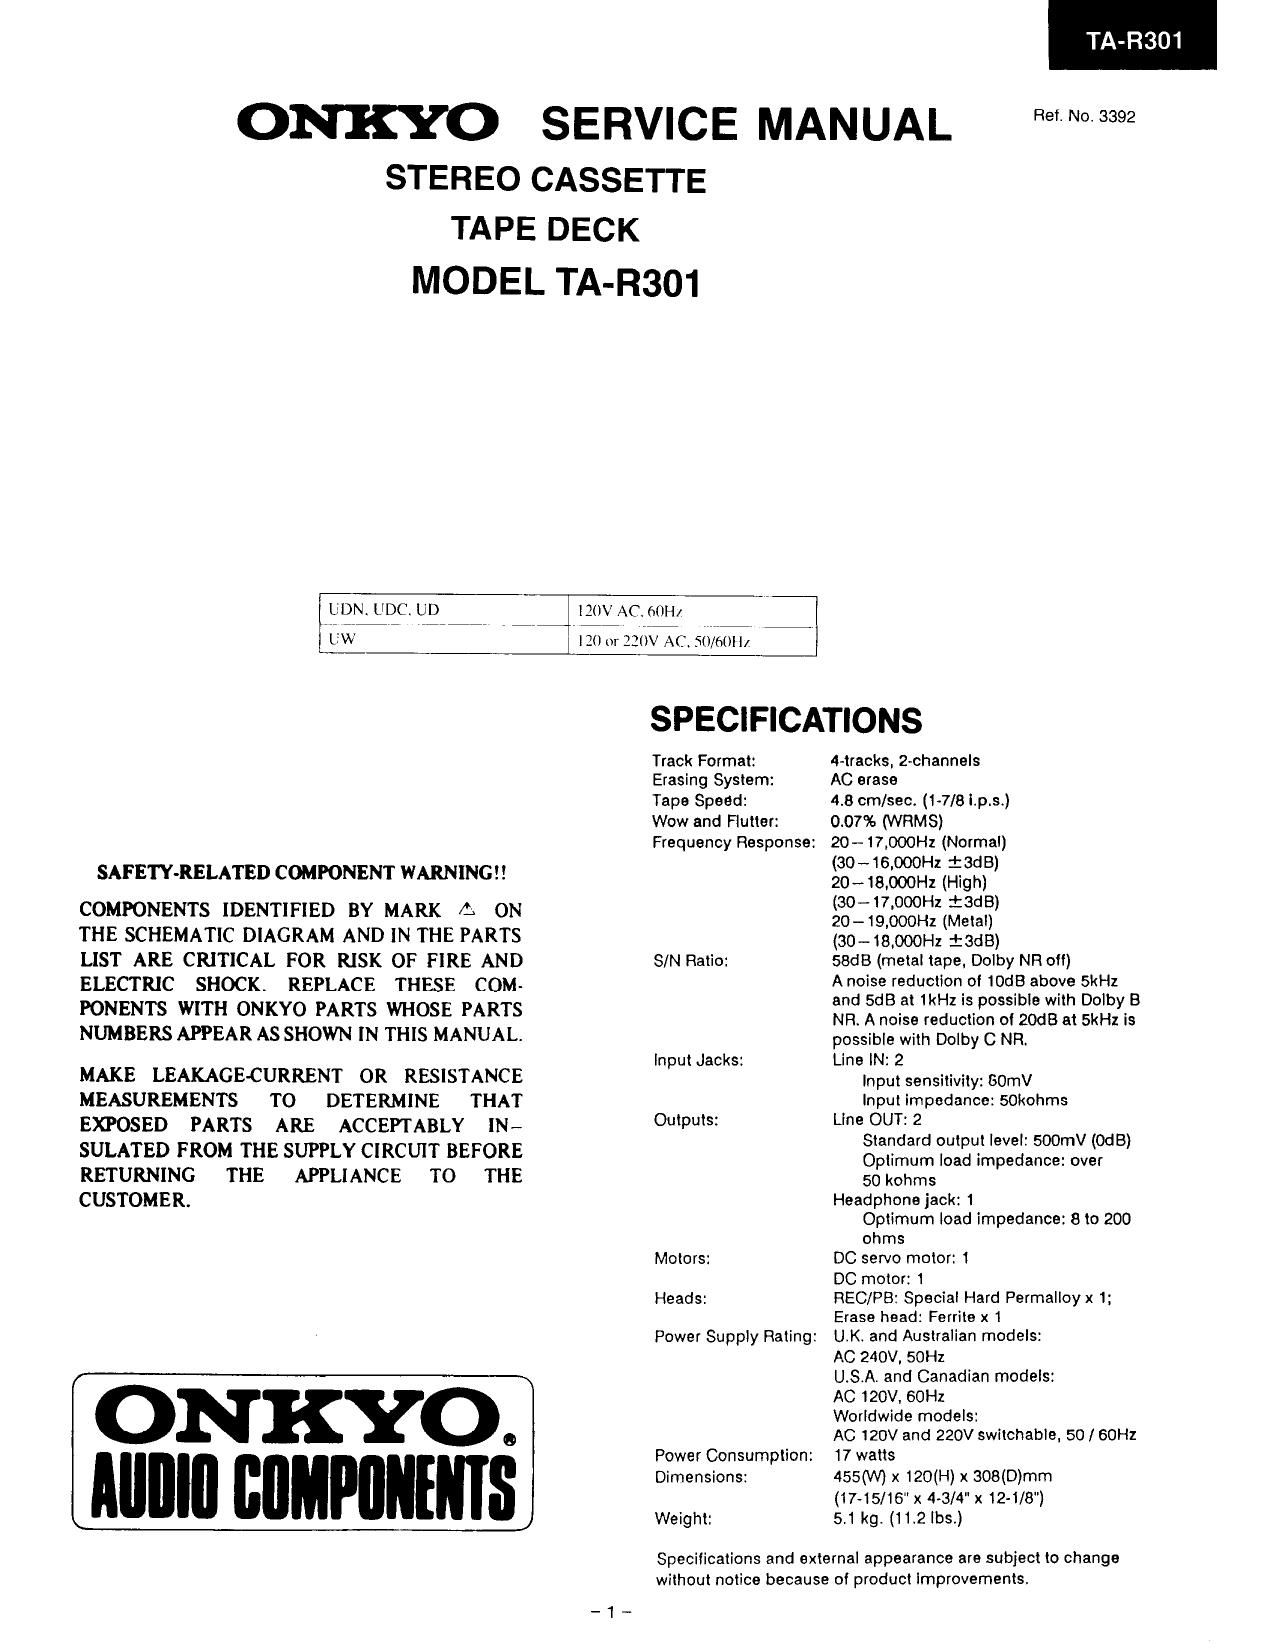 Onkyo TAR 301 Service Manual